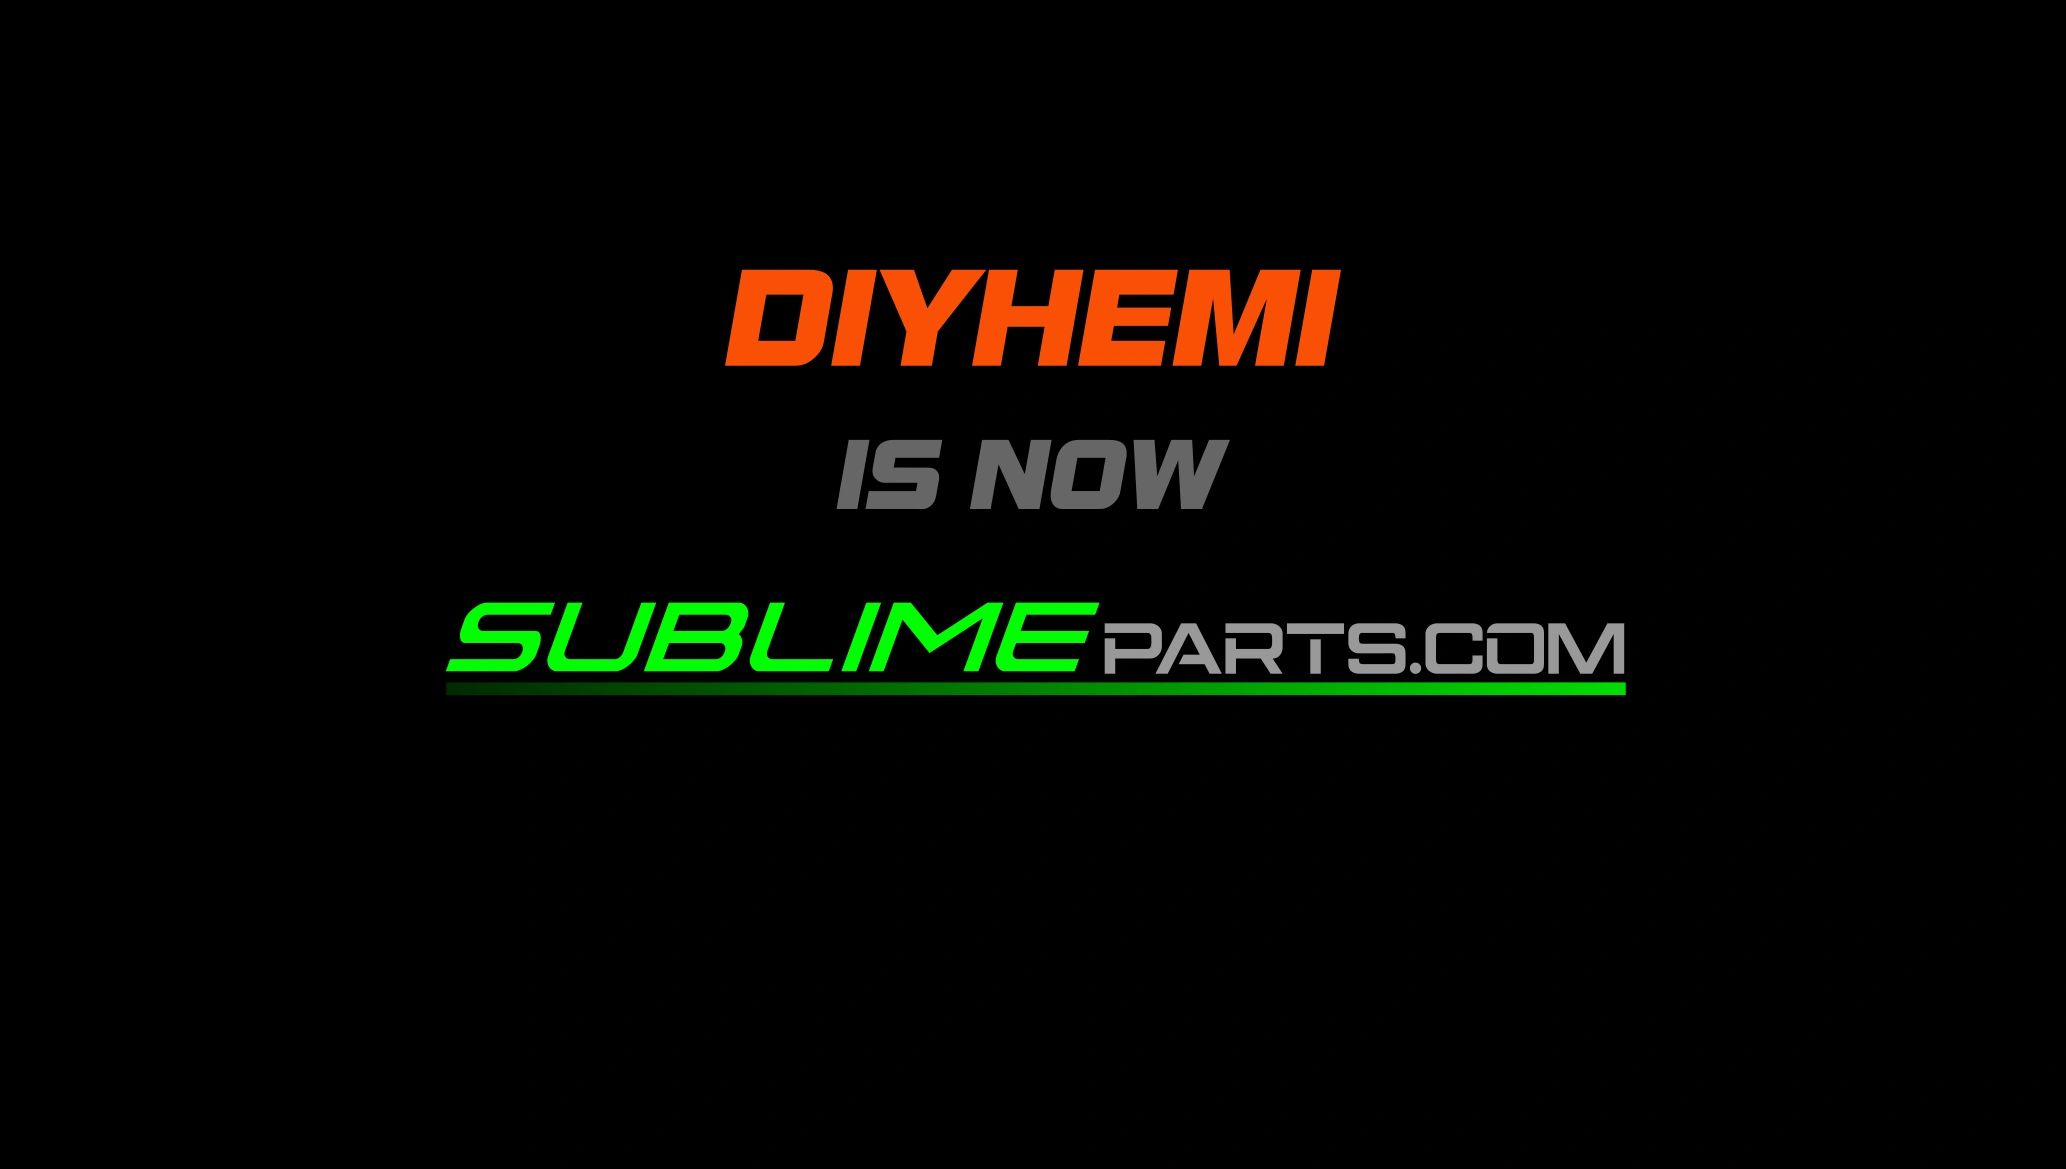 www.diyhemi.com